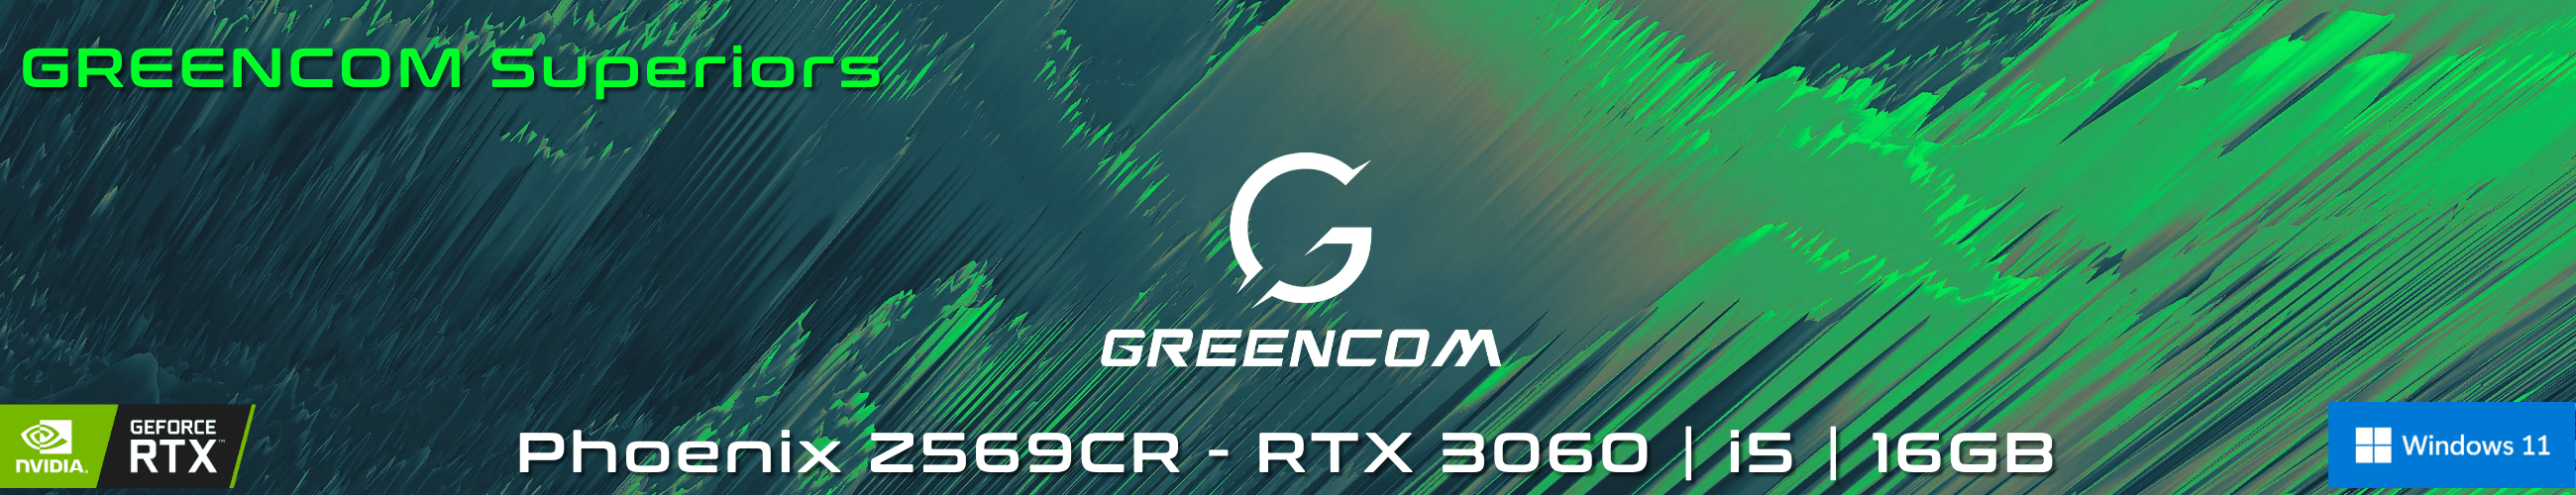 Greencom Phoenix Z569CR